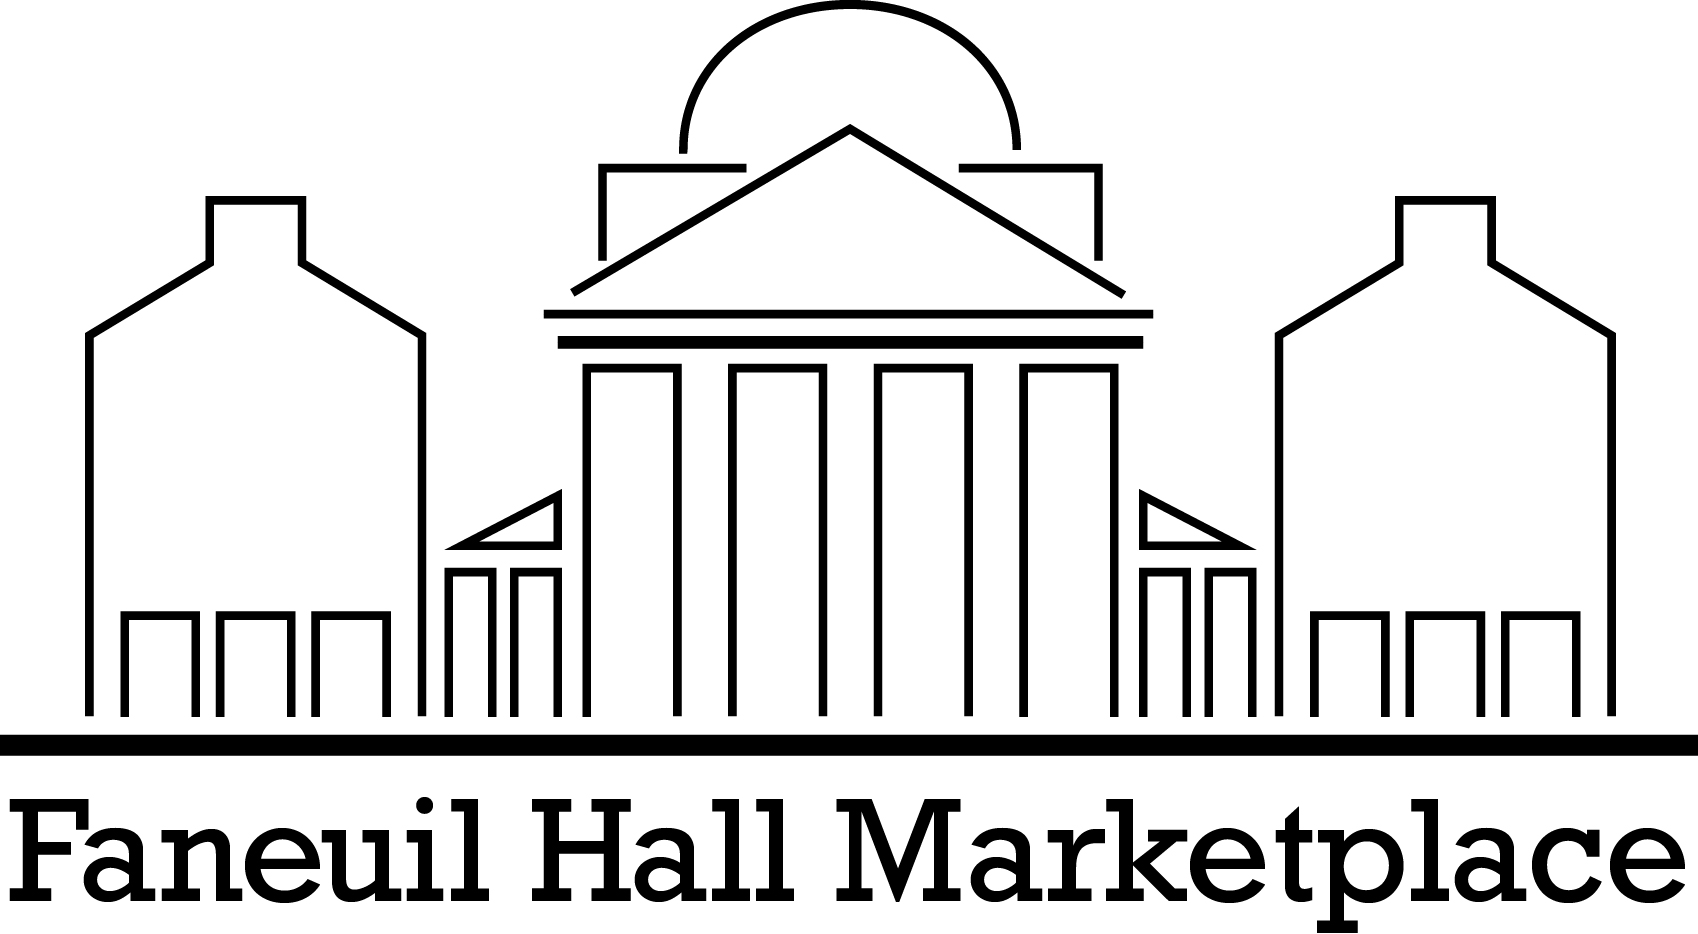 Boston Logos  Faneuil Hall Marketplace - Boston, MA